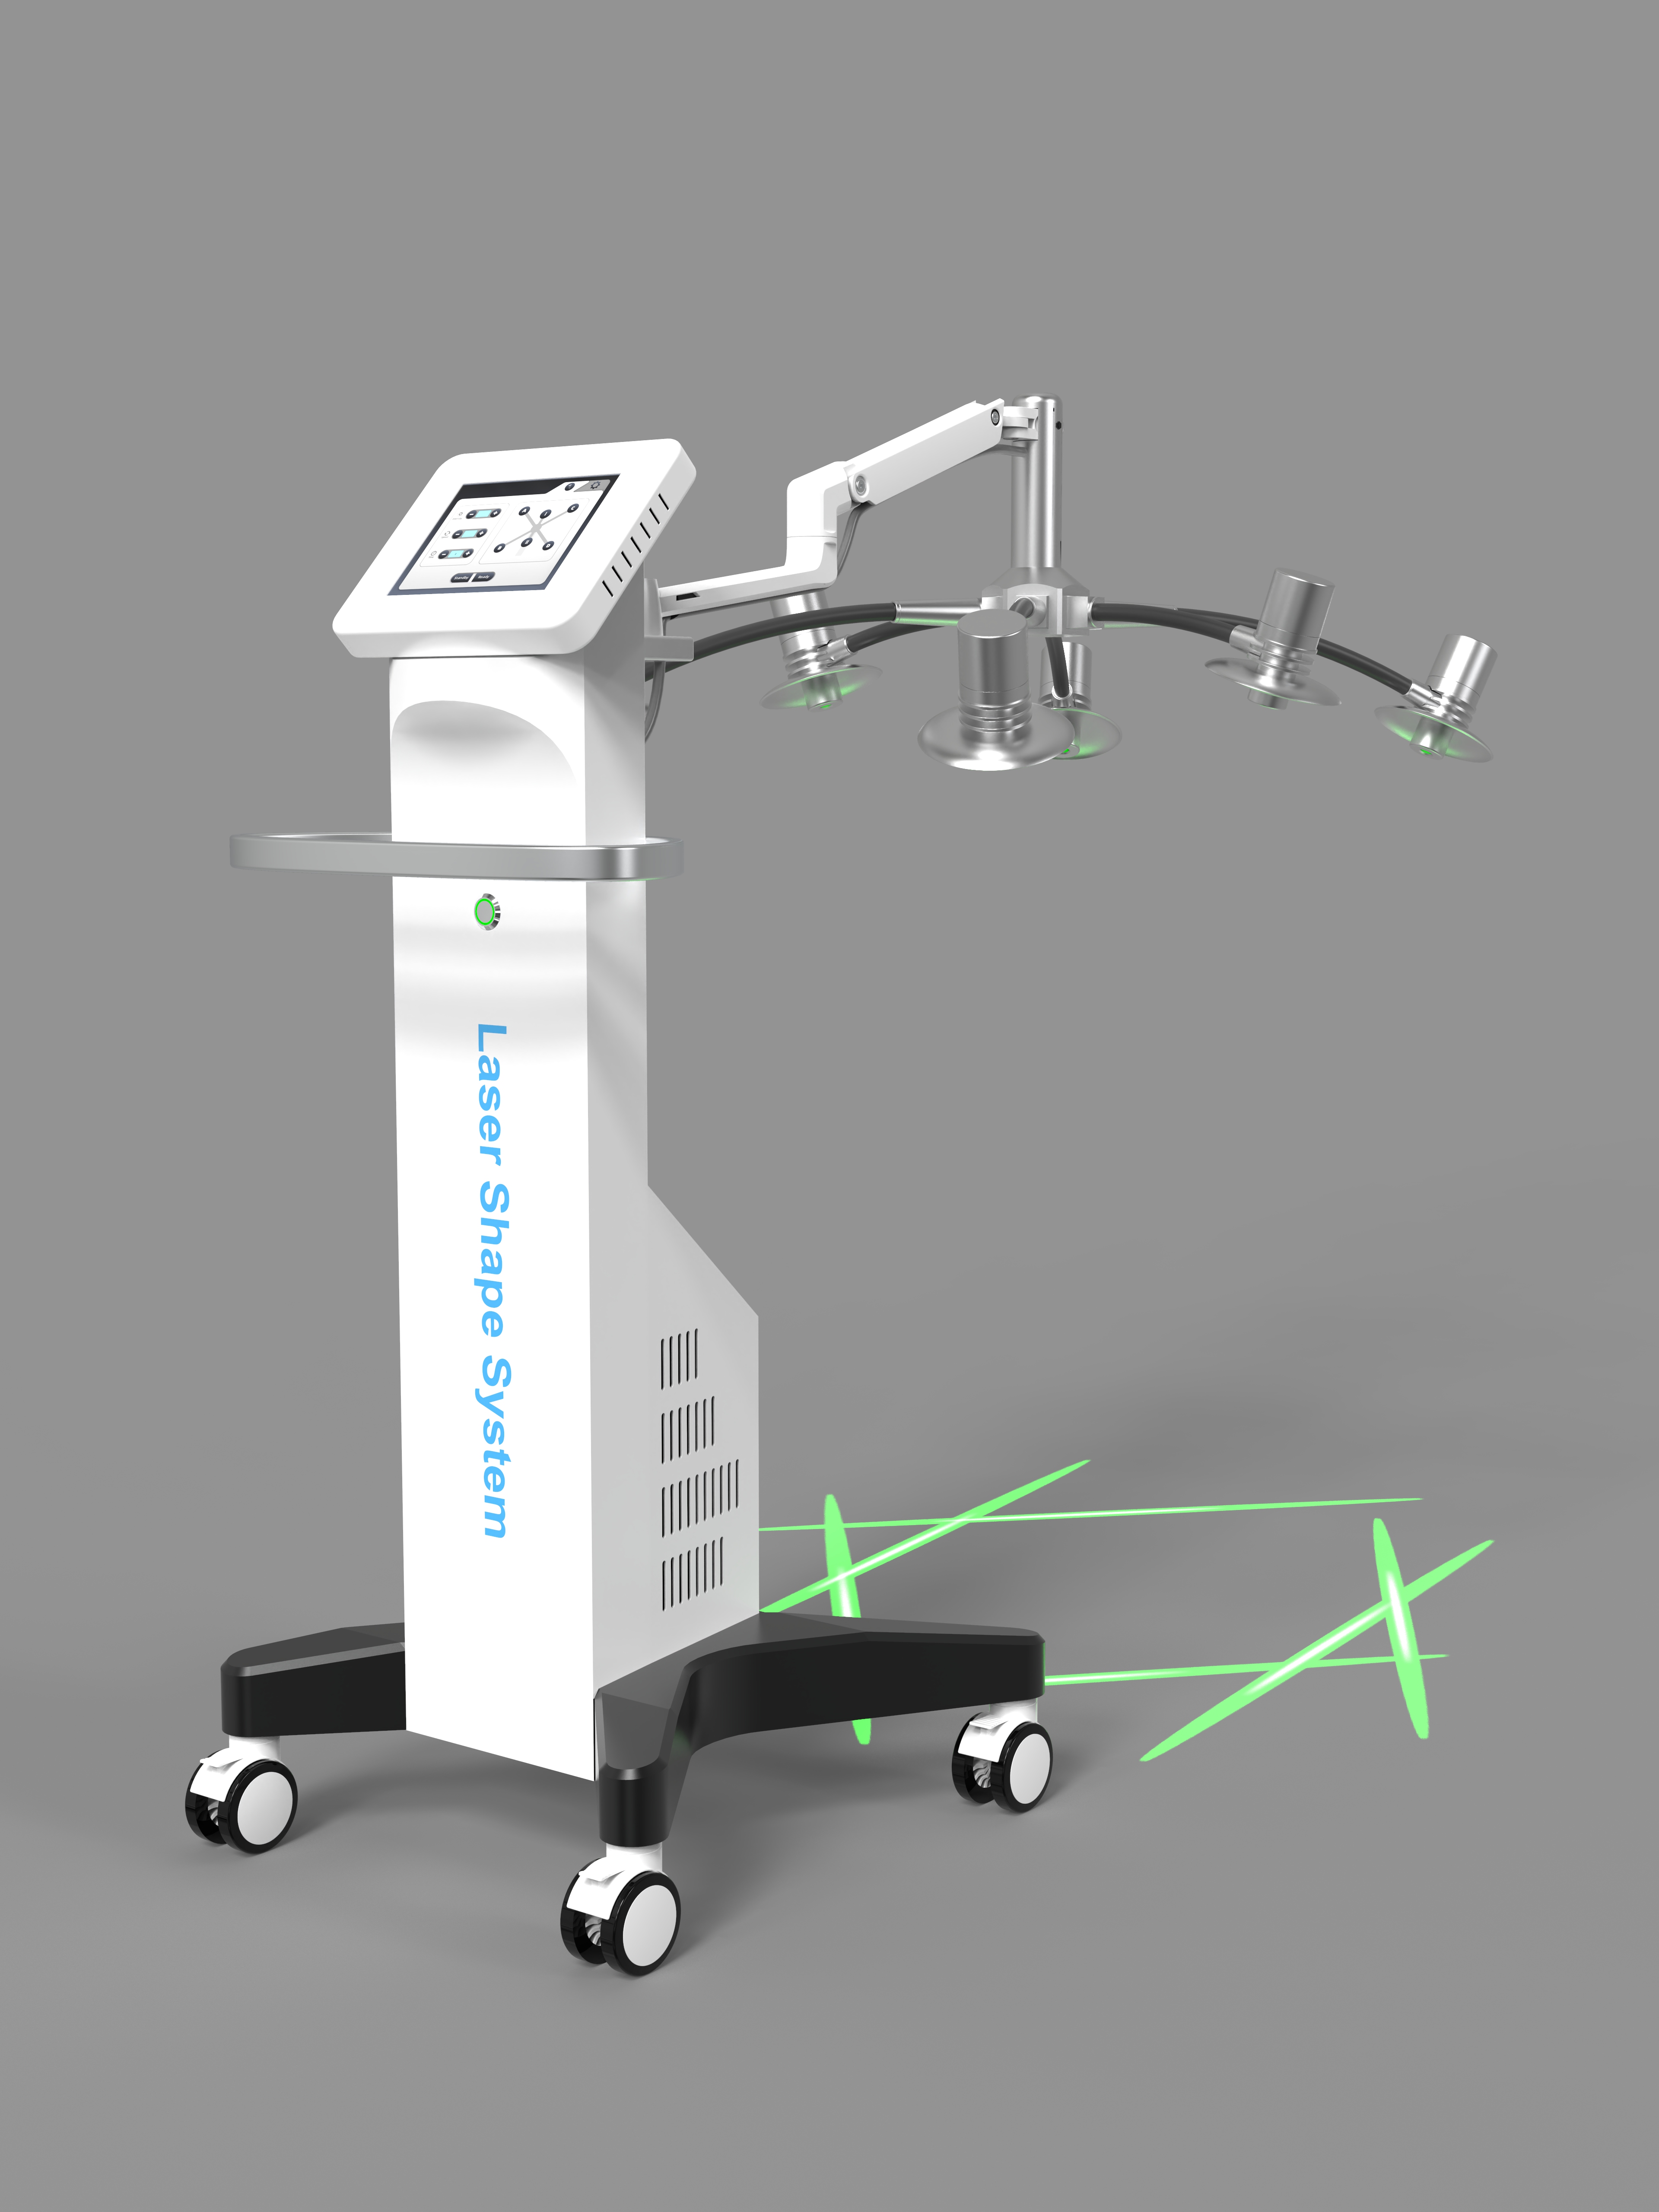 Zerona Body Laser Slimming Machine for Sale Non-Invasive LS656